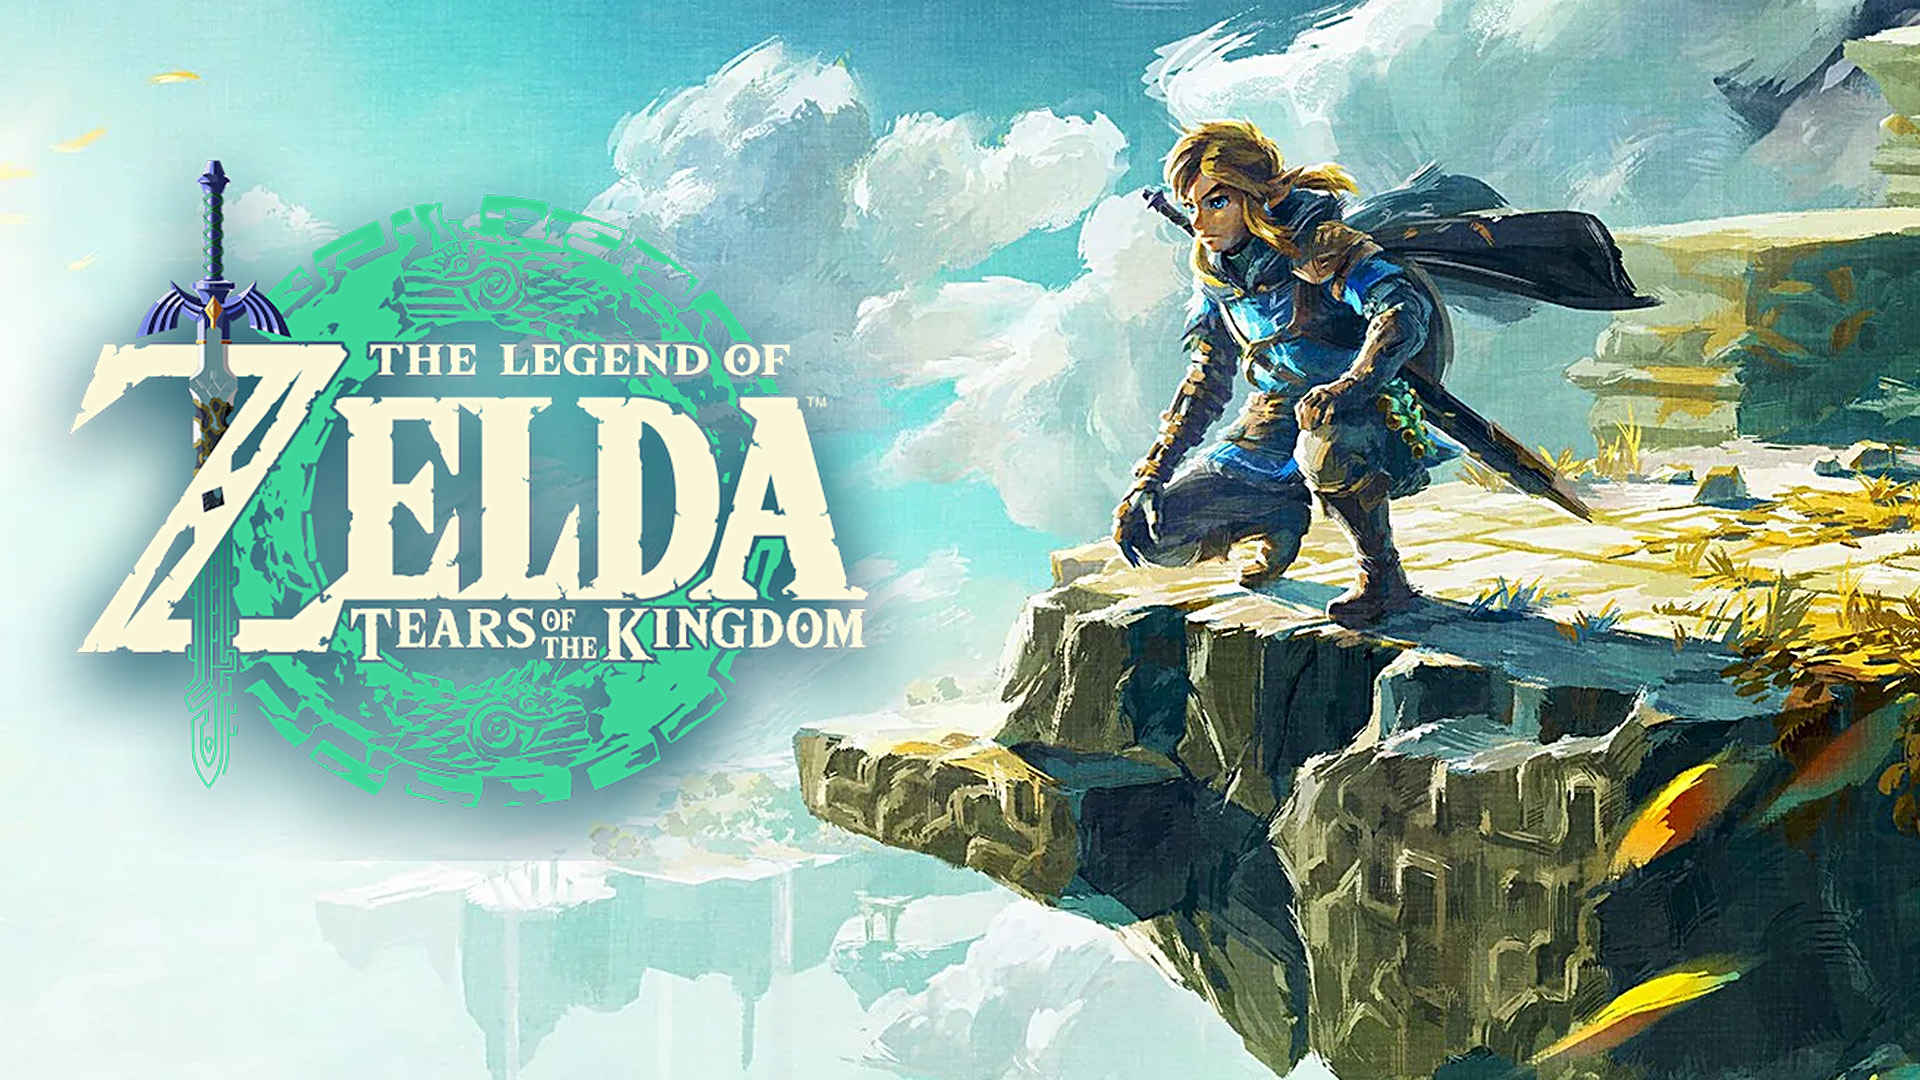 Zelda: Breath of the Wild Gets DLC - mxdwn Games